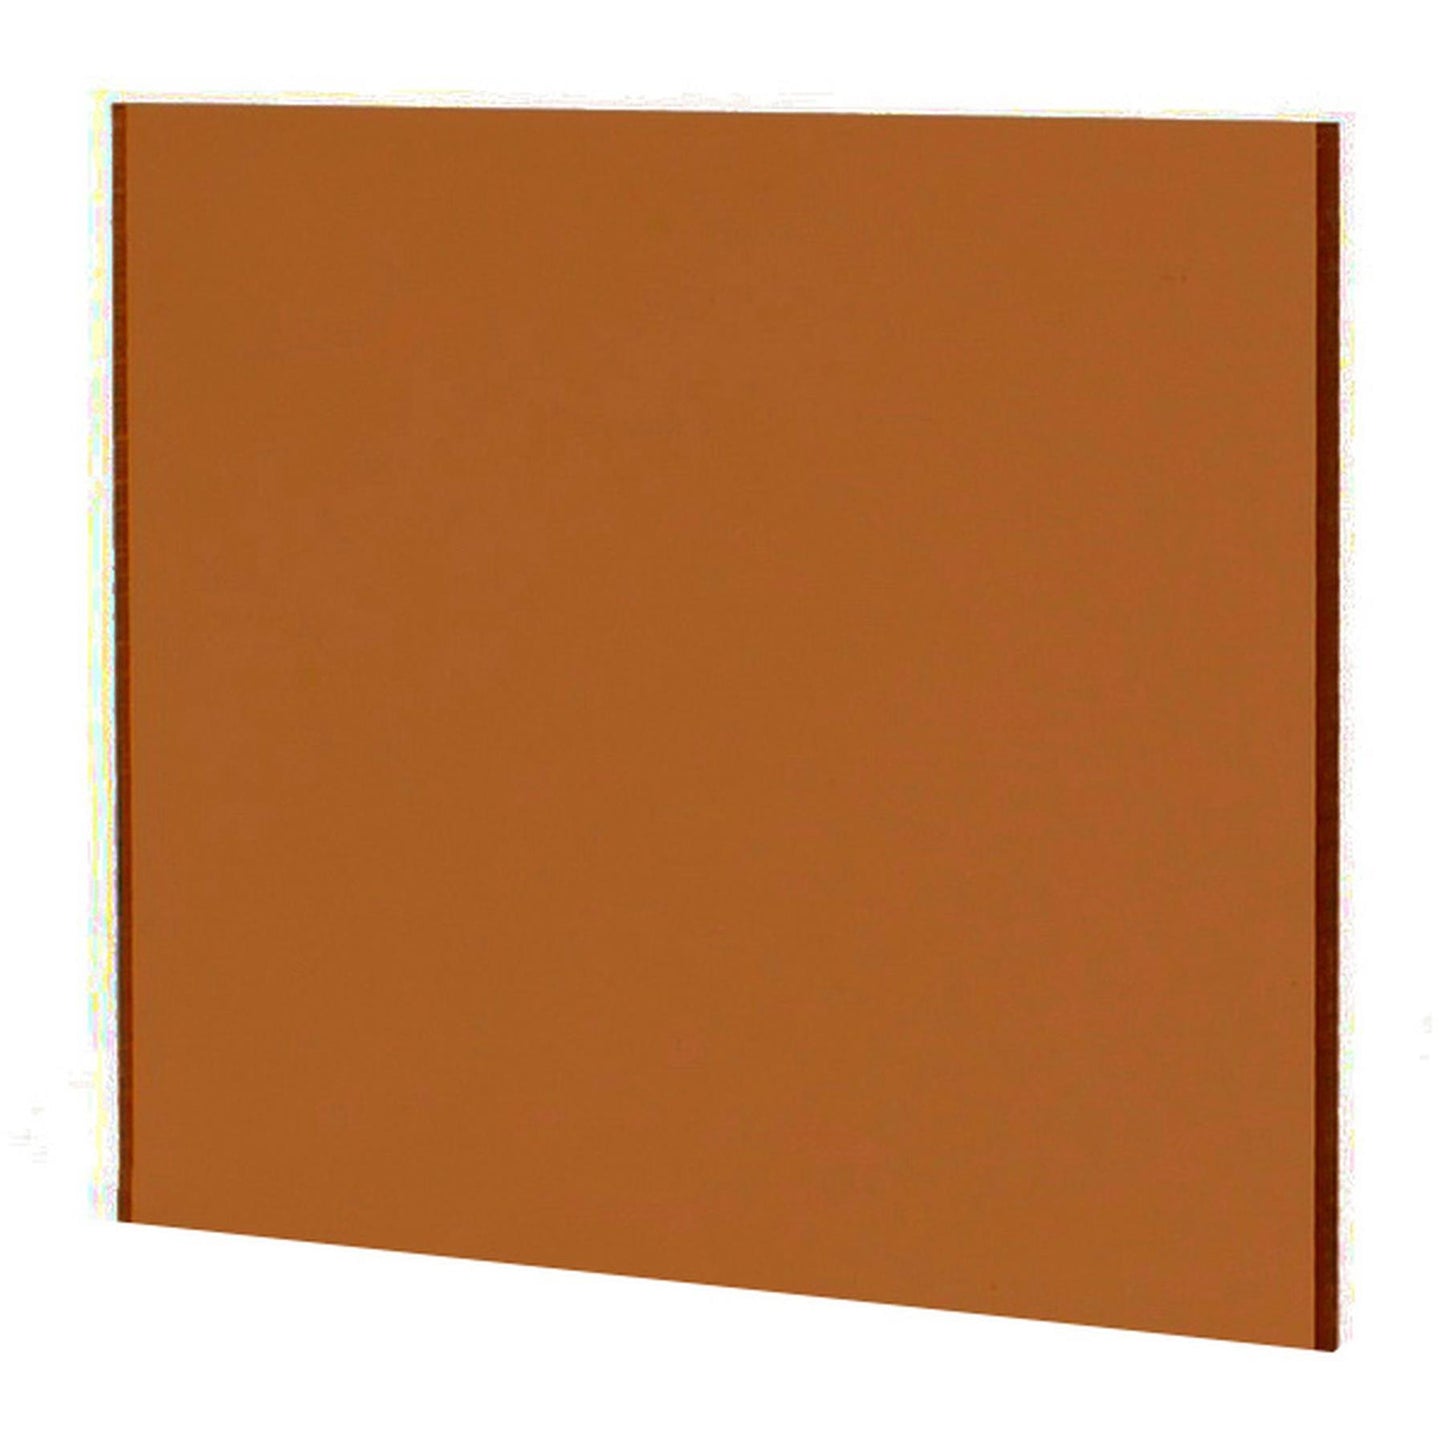 Incudo Brown Transparent Acrylic Sheet - Sample